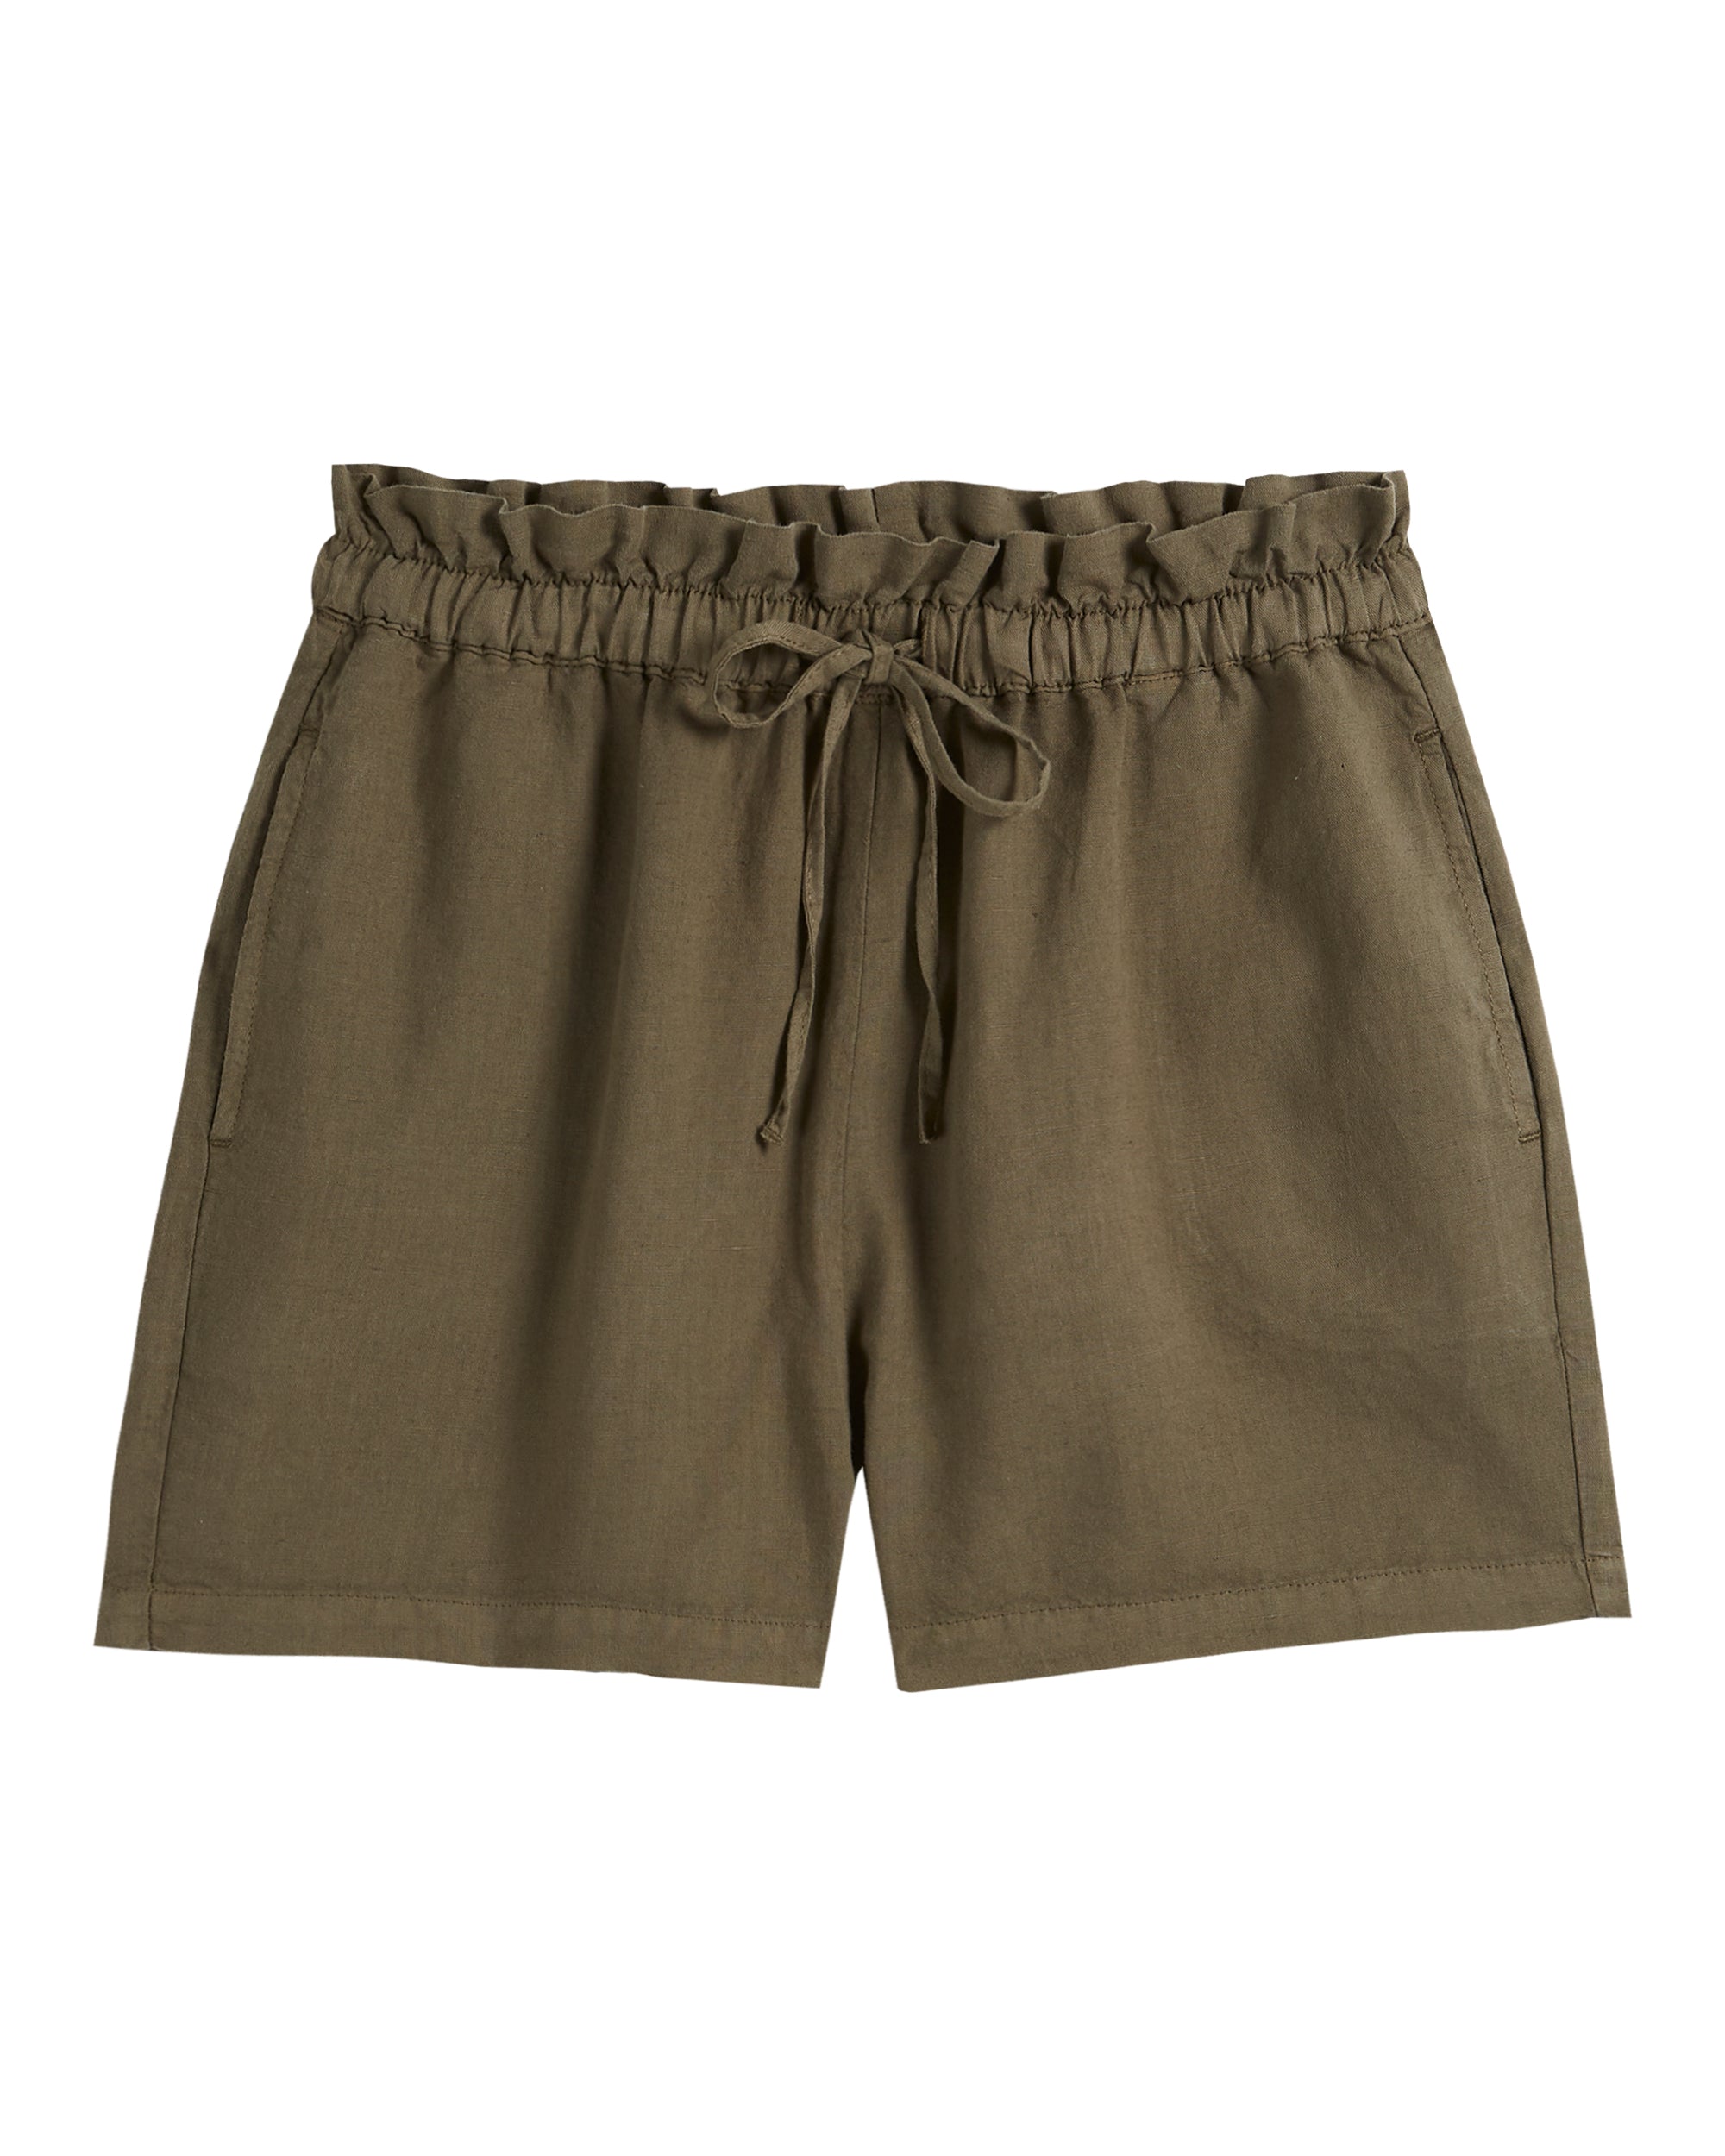 Khaki linen blend shorts with drawstring waist 